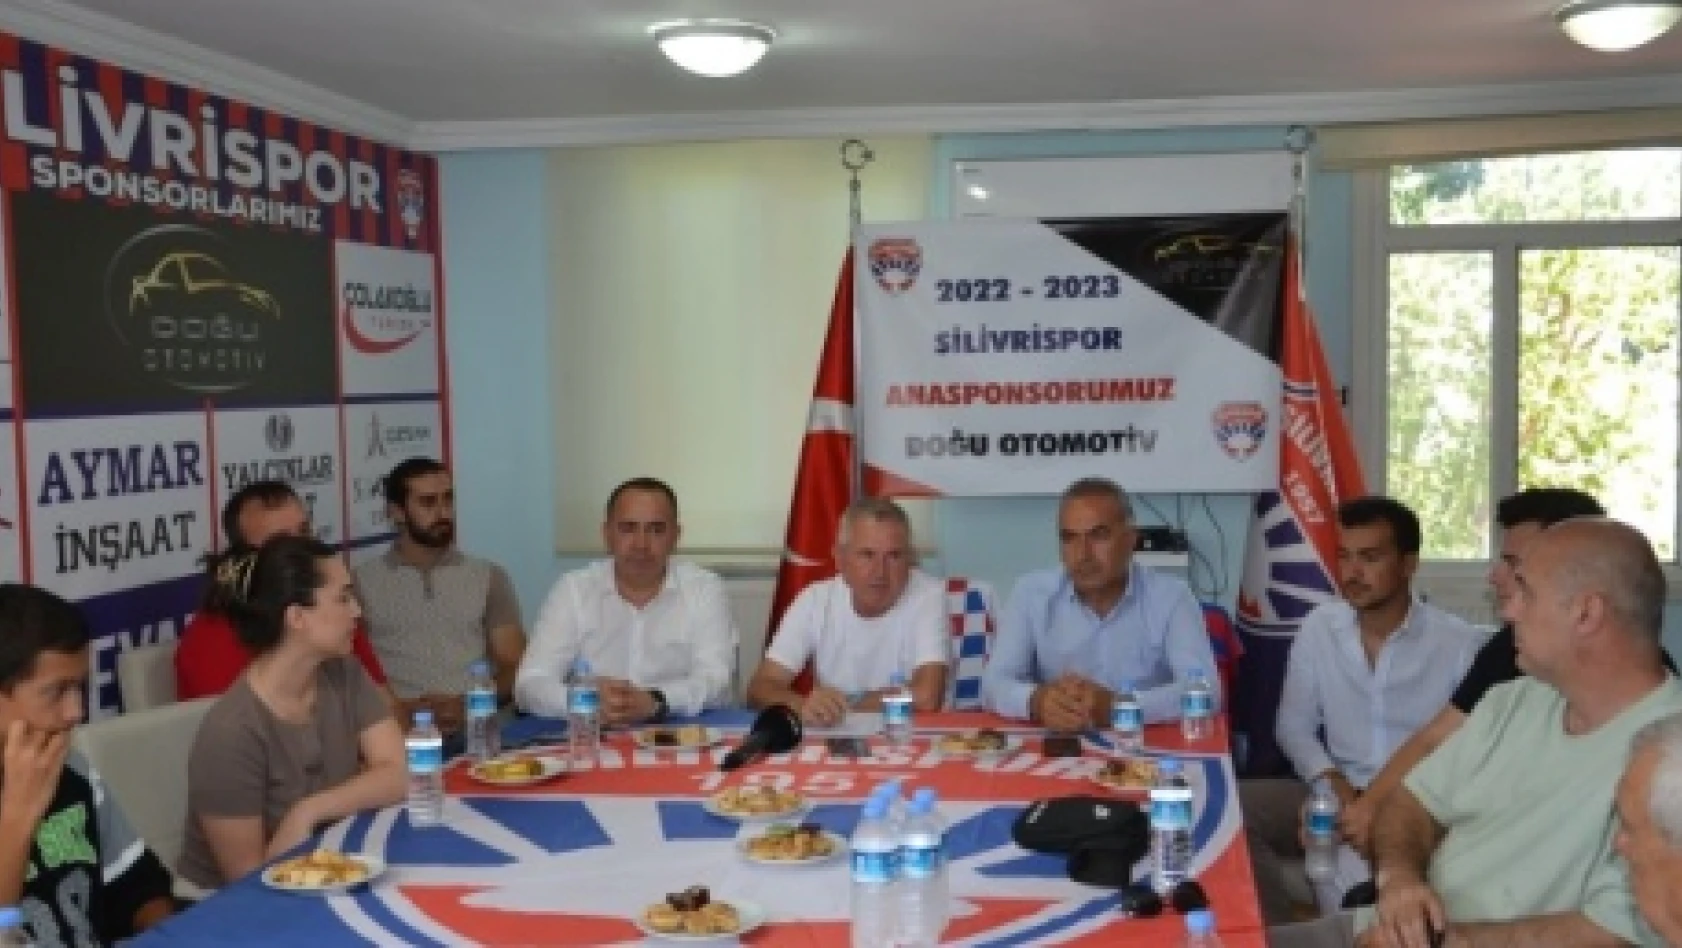 Doğu Otomotiv, Silivrispor'un ana sponsoru oldu